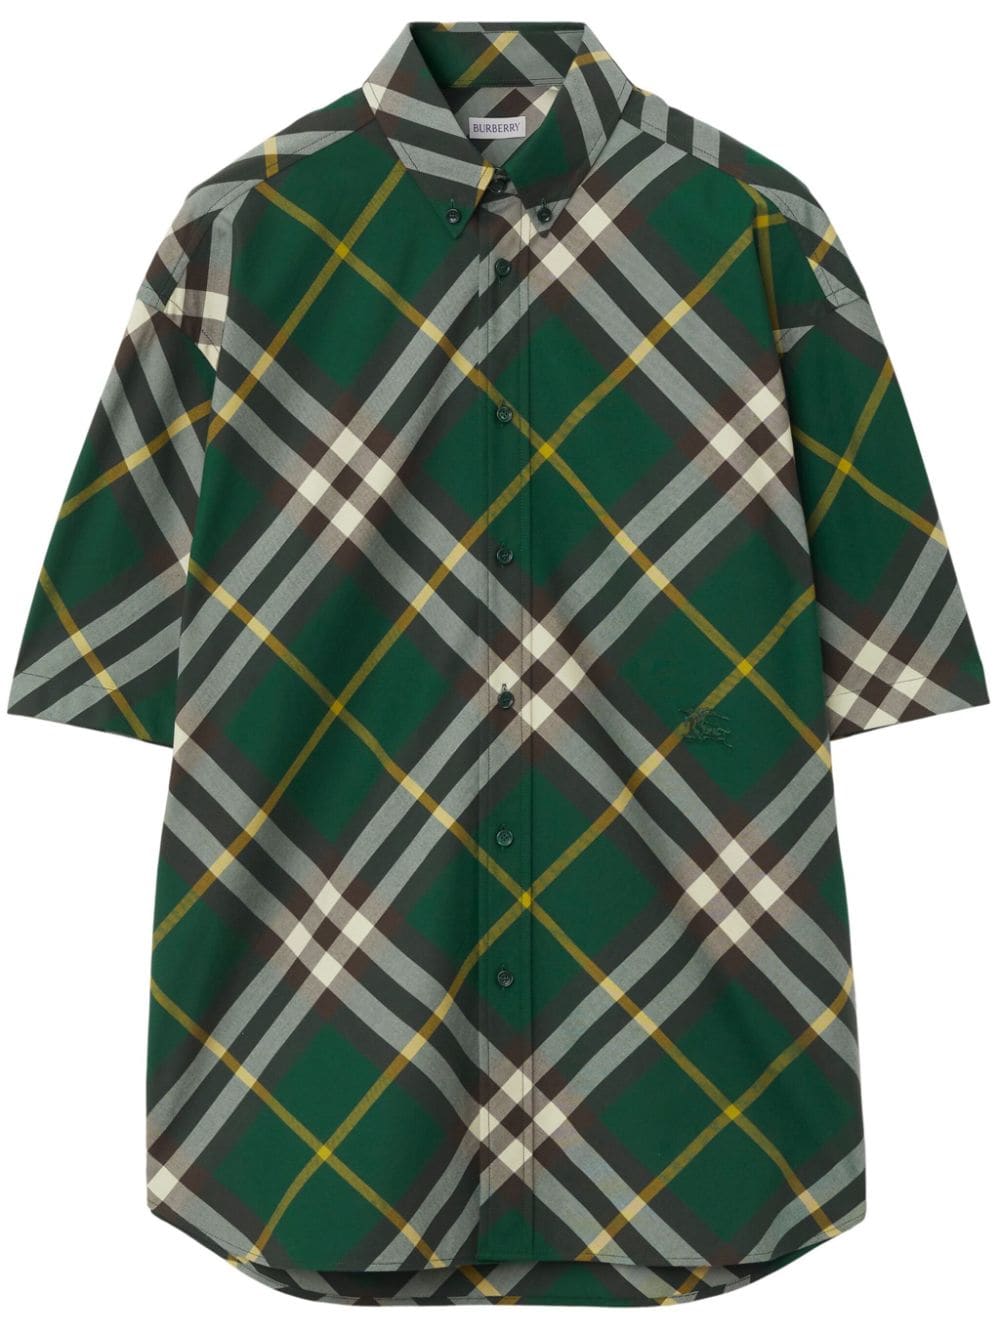 Green/multicolour cotton plaid check pattern shirt